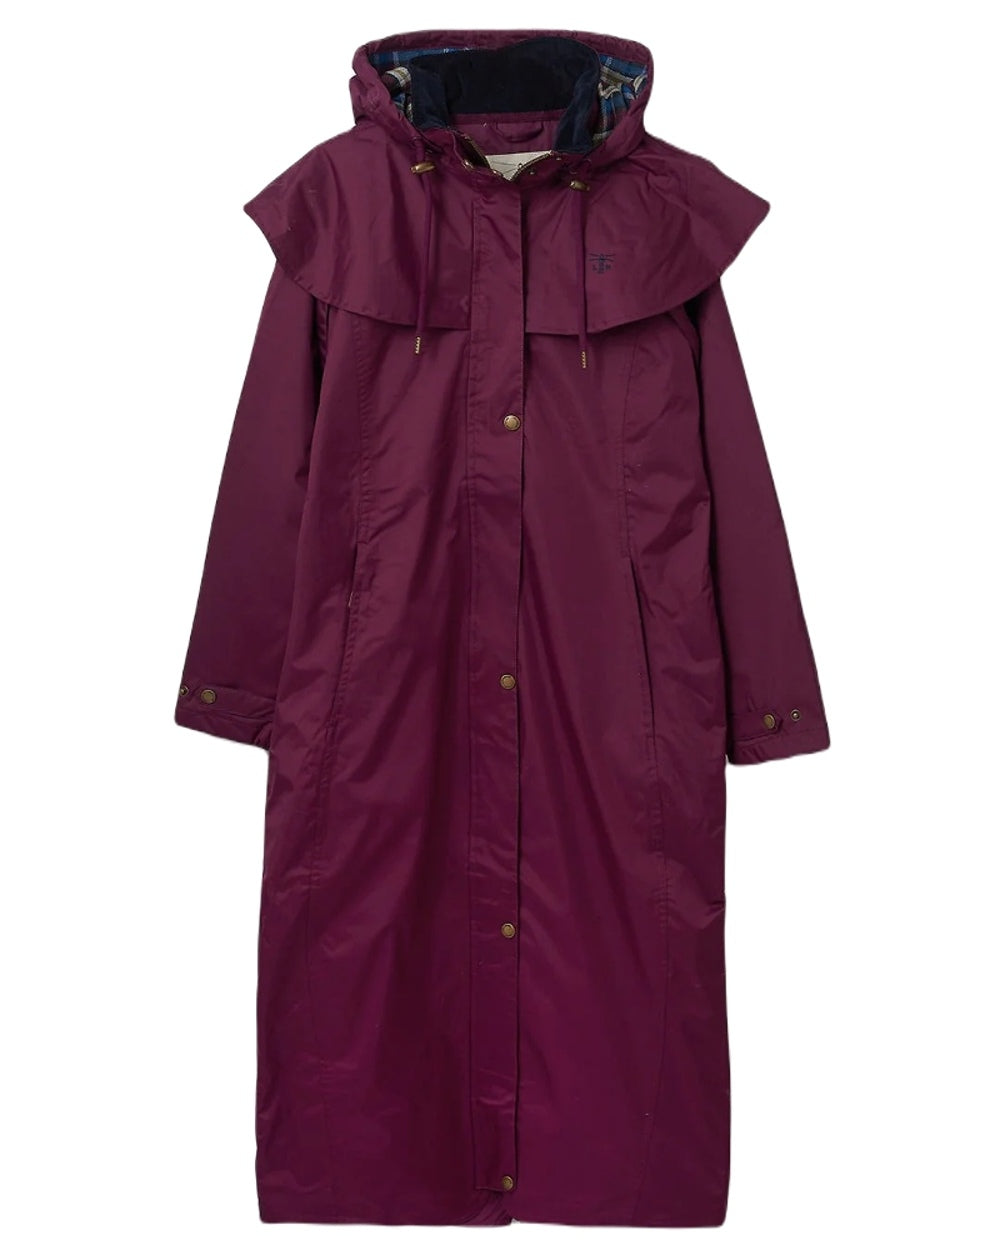 Lighthouse Outback Full Length Ladies Waterproof Raincoat in Plum 